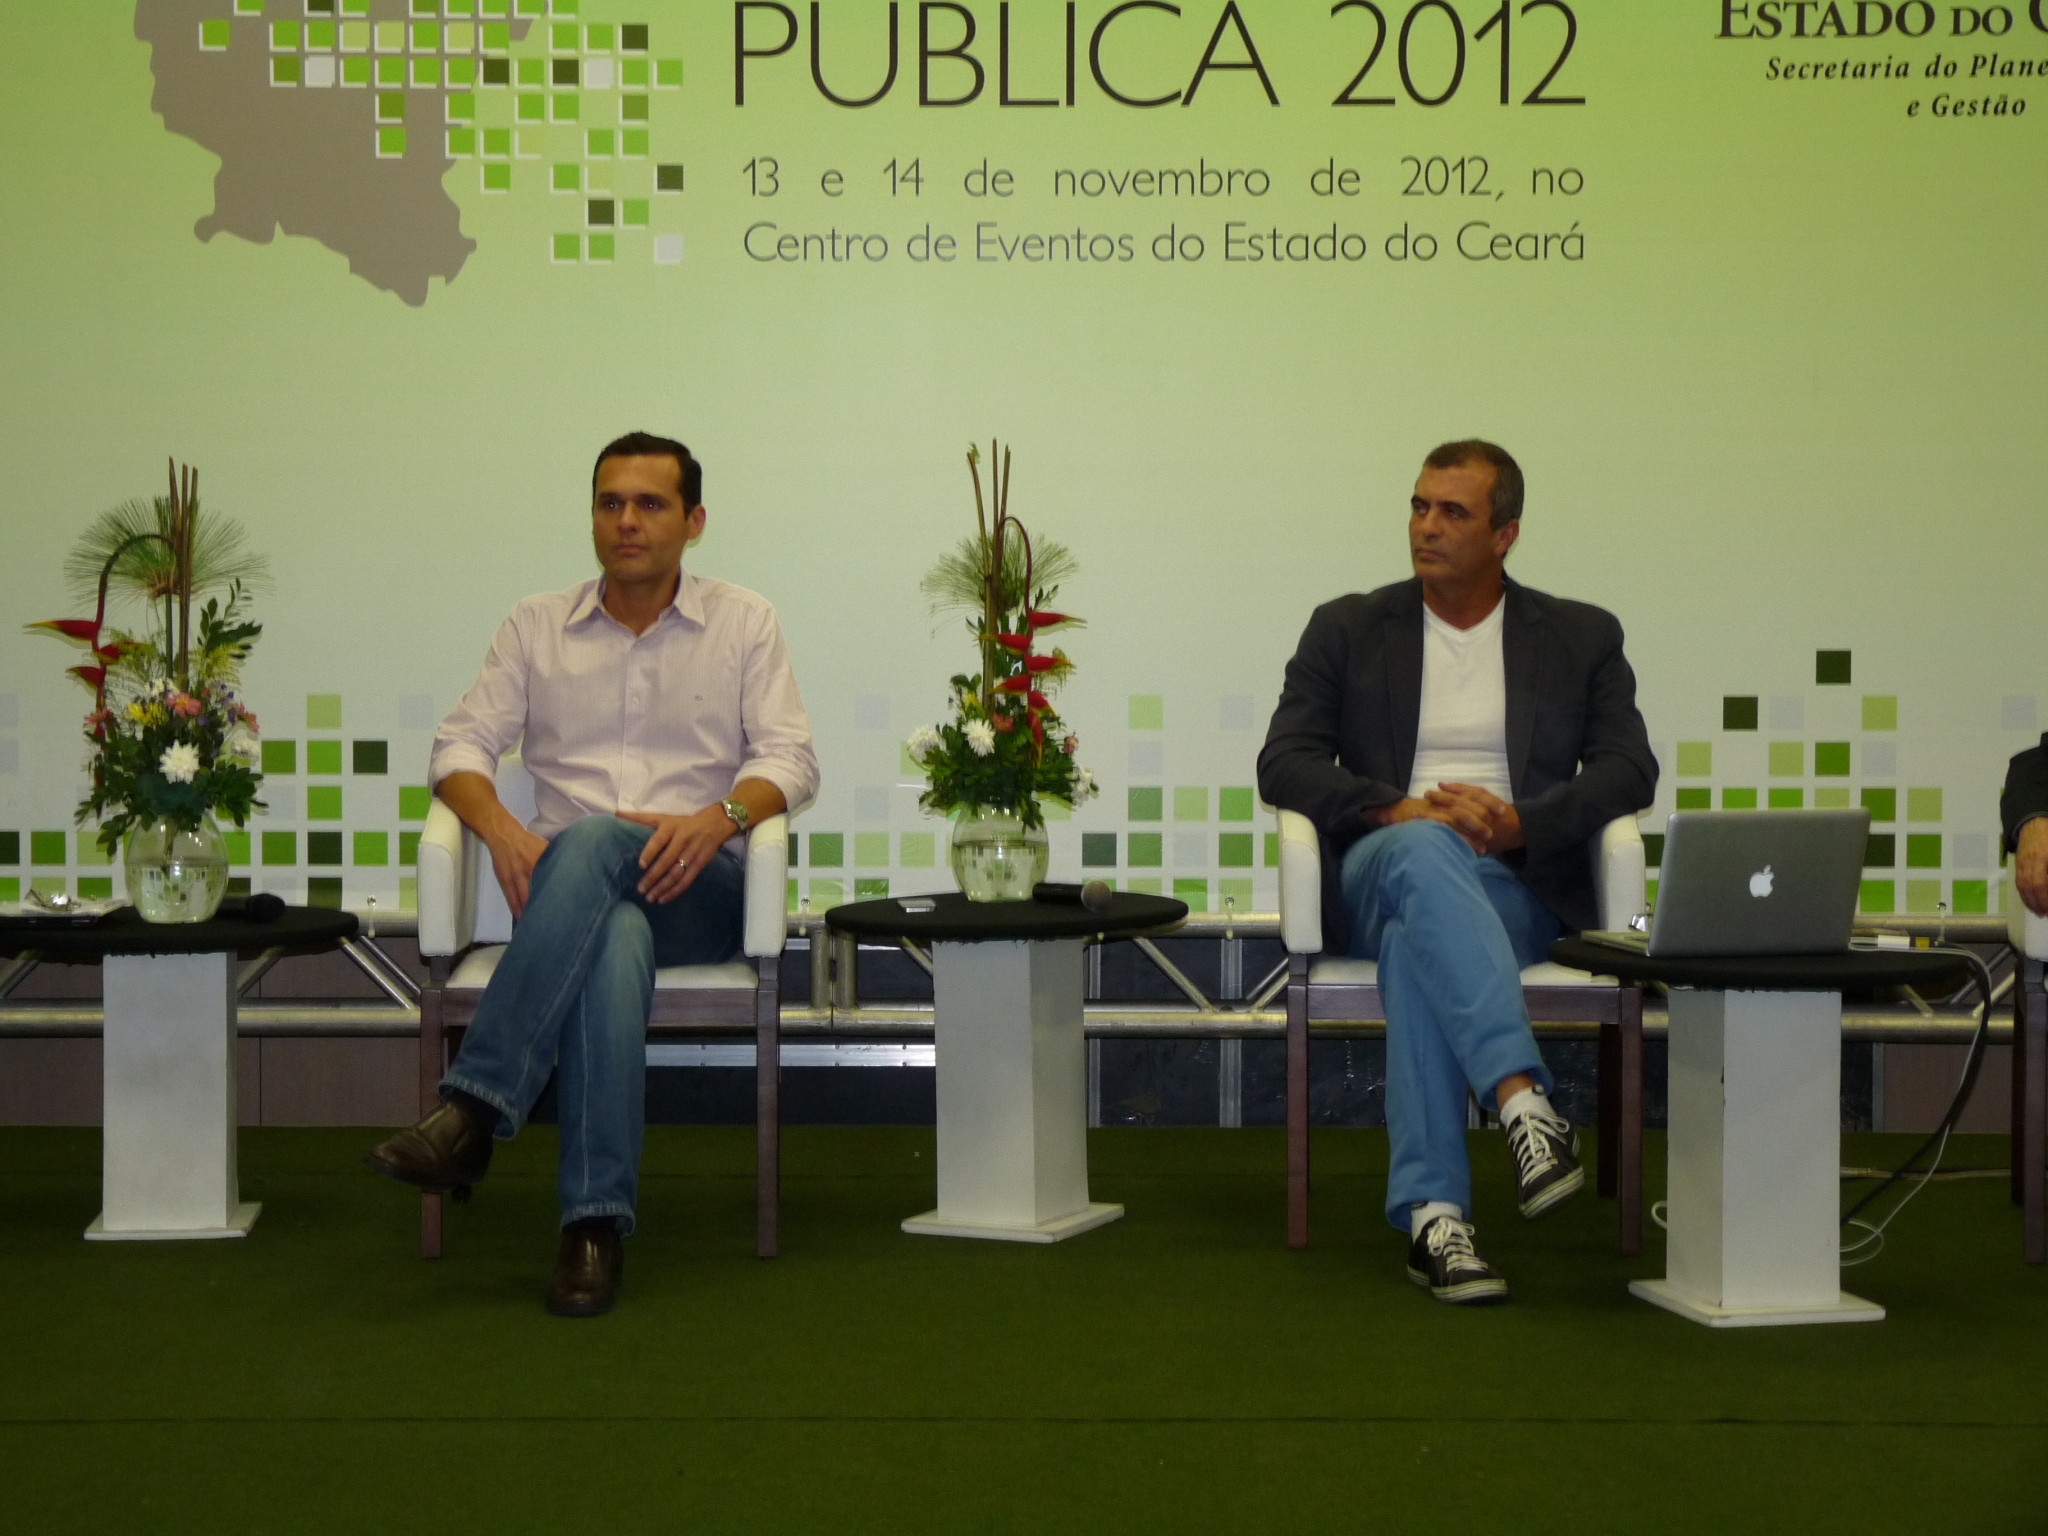 Palestra de Paulo Barros encerra Congresso de Gestão Pública 2012